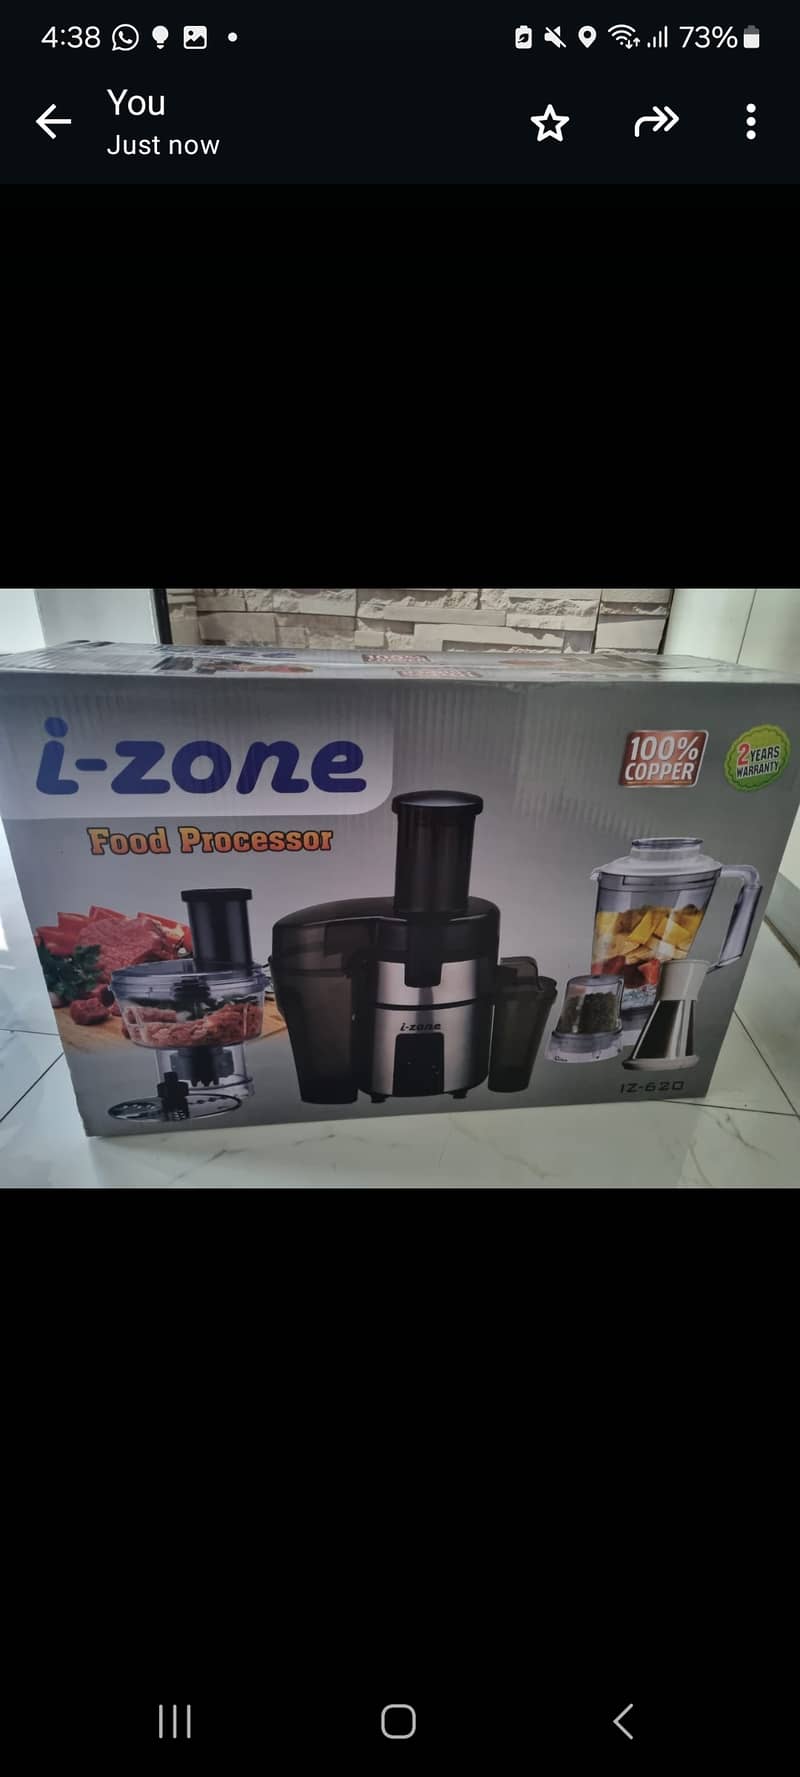 I-zone Food Processor Brand New 2